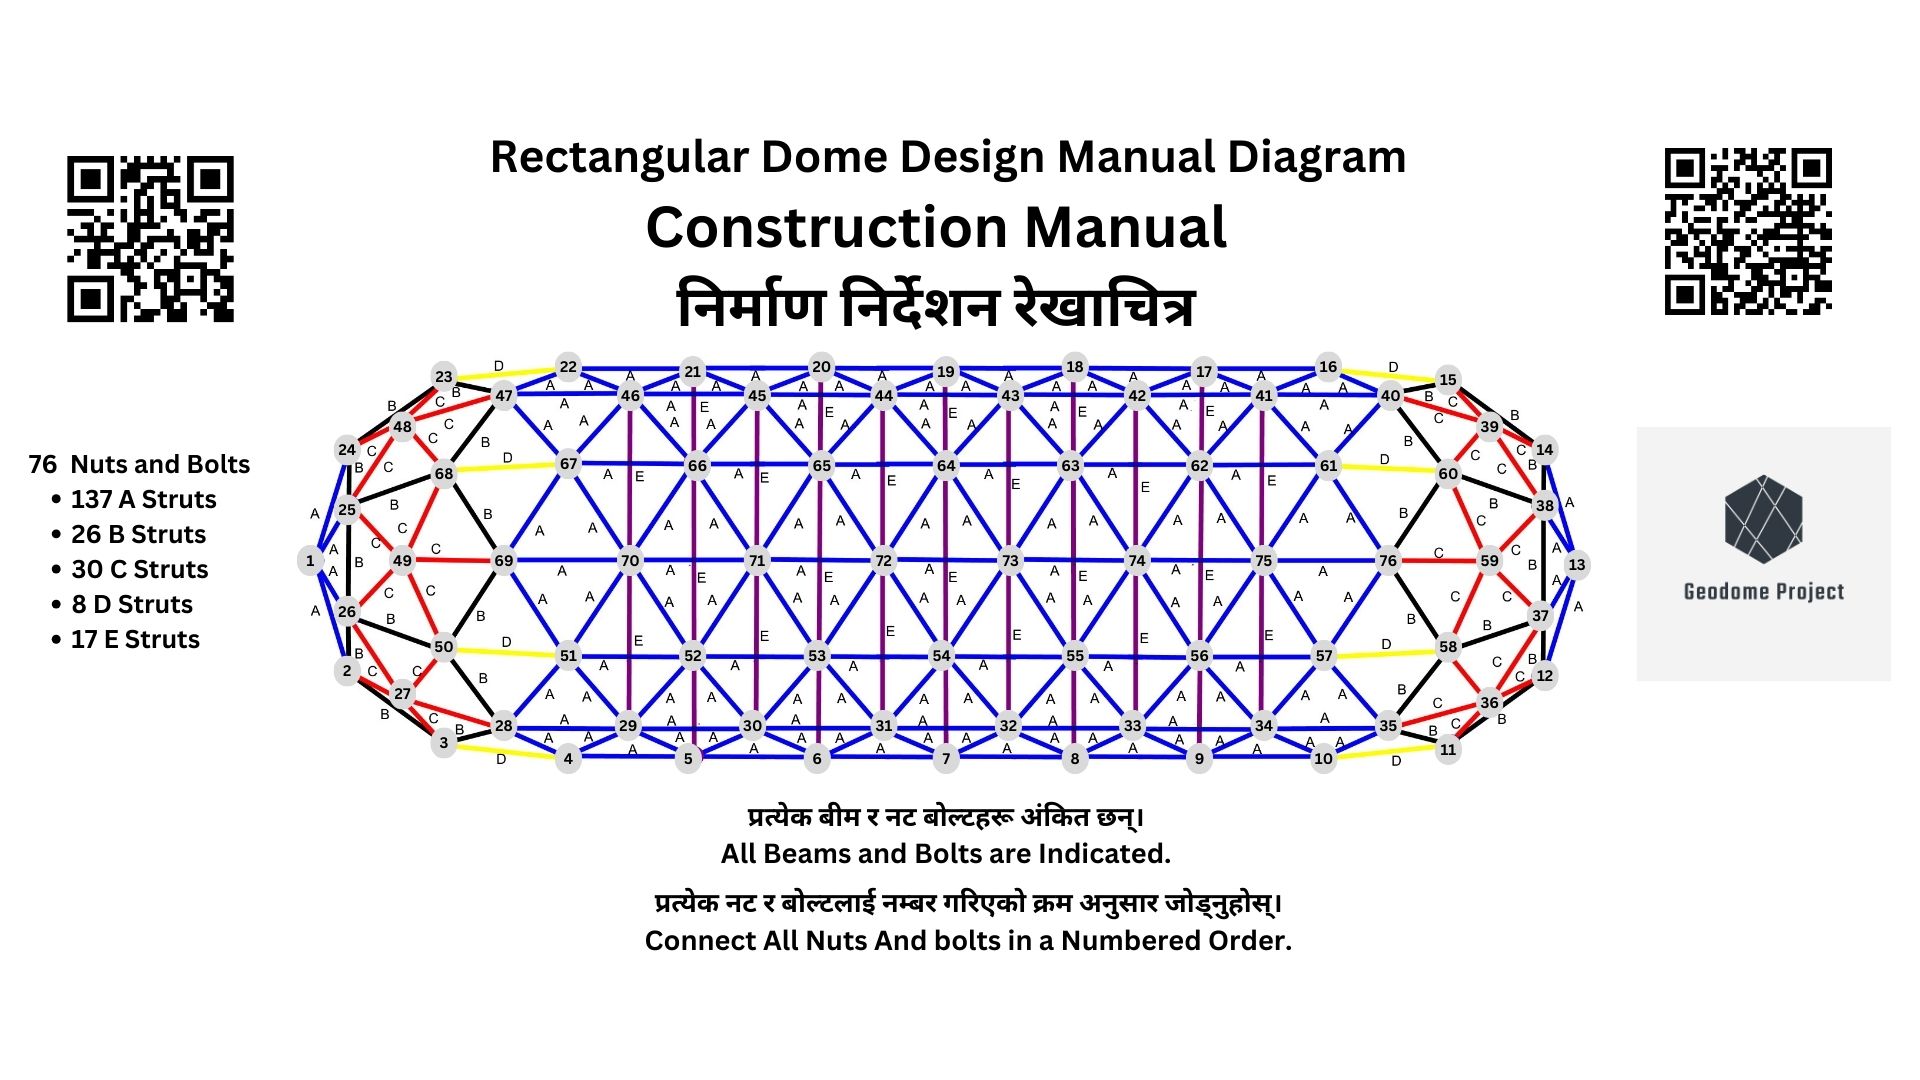 Our Design Manual